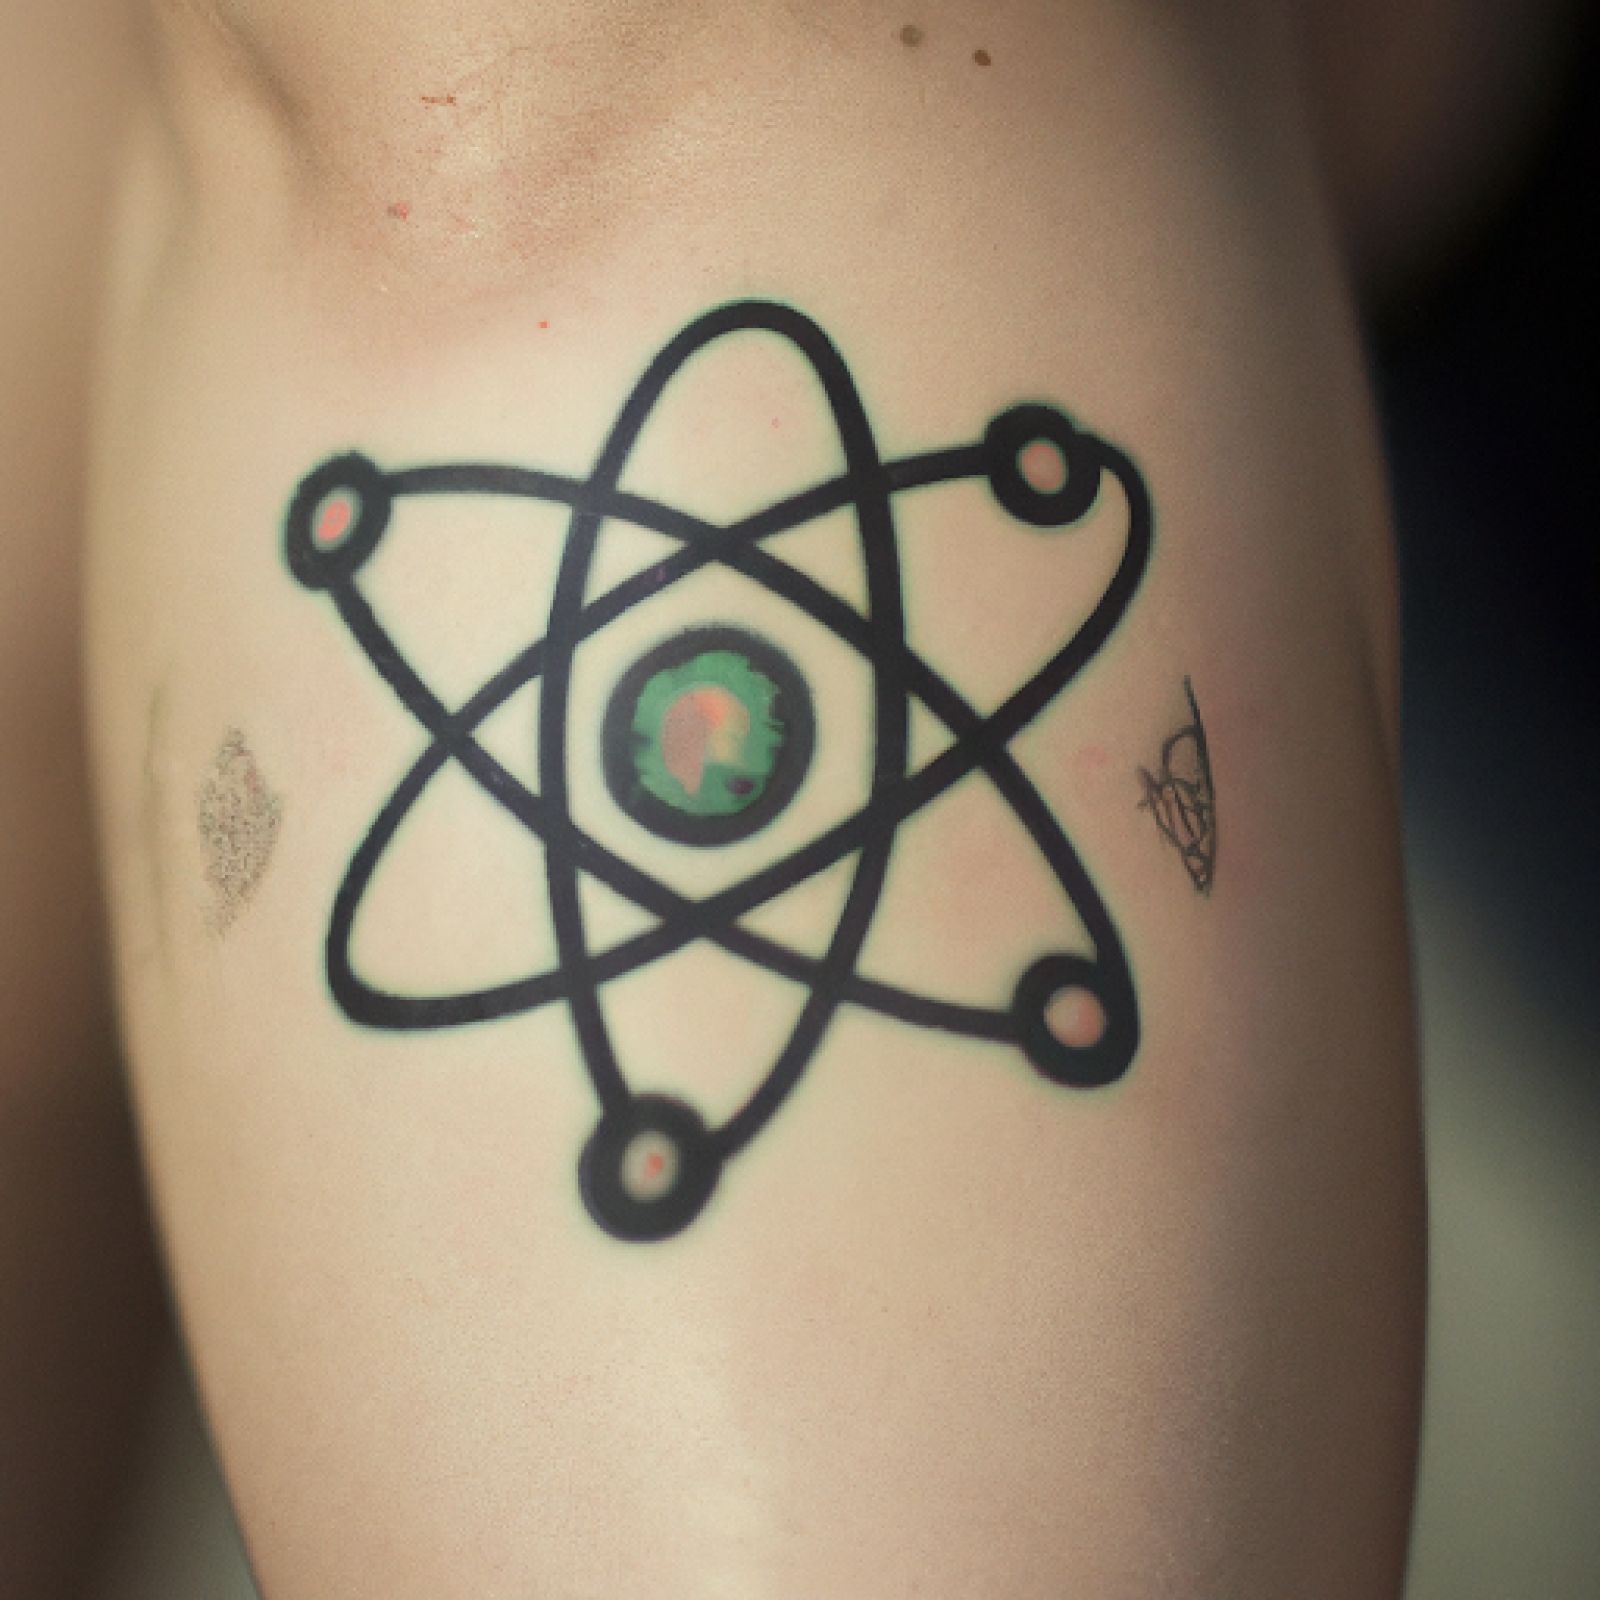 Atom tattoo on knee for women